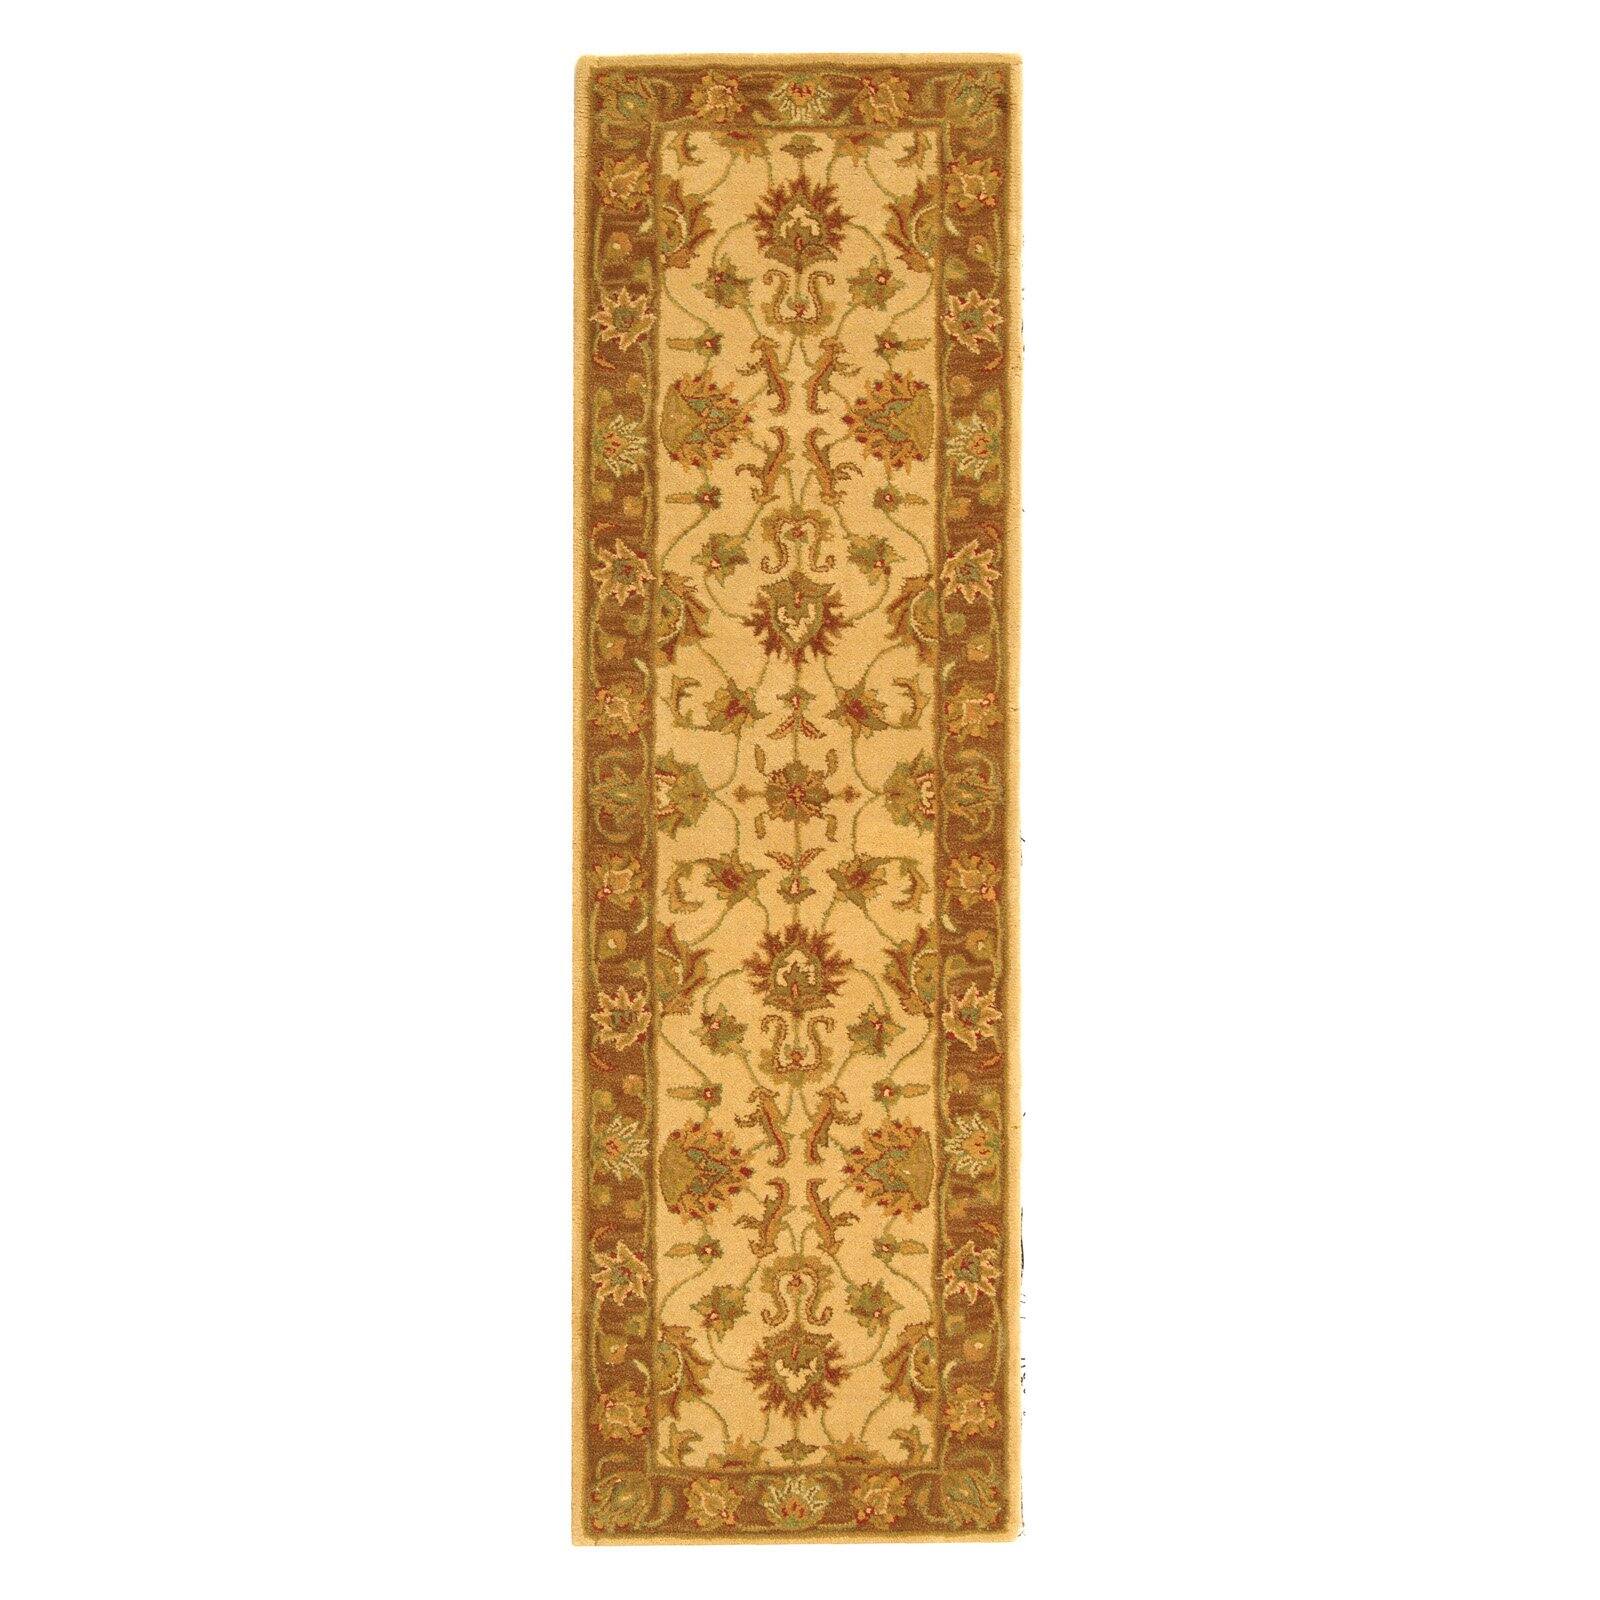 SAFAVIEH Heritage Regis Traditional Wool Area Rug, Ivory/Brown, 4' x 6' - image 4 of 9